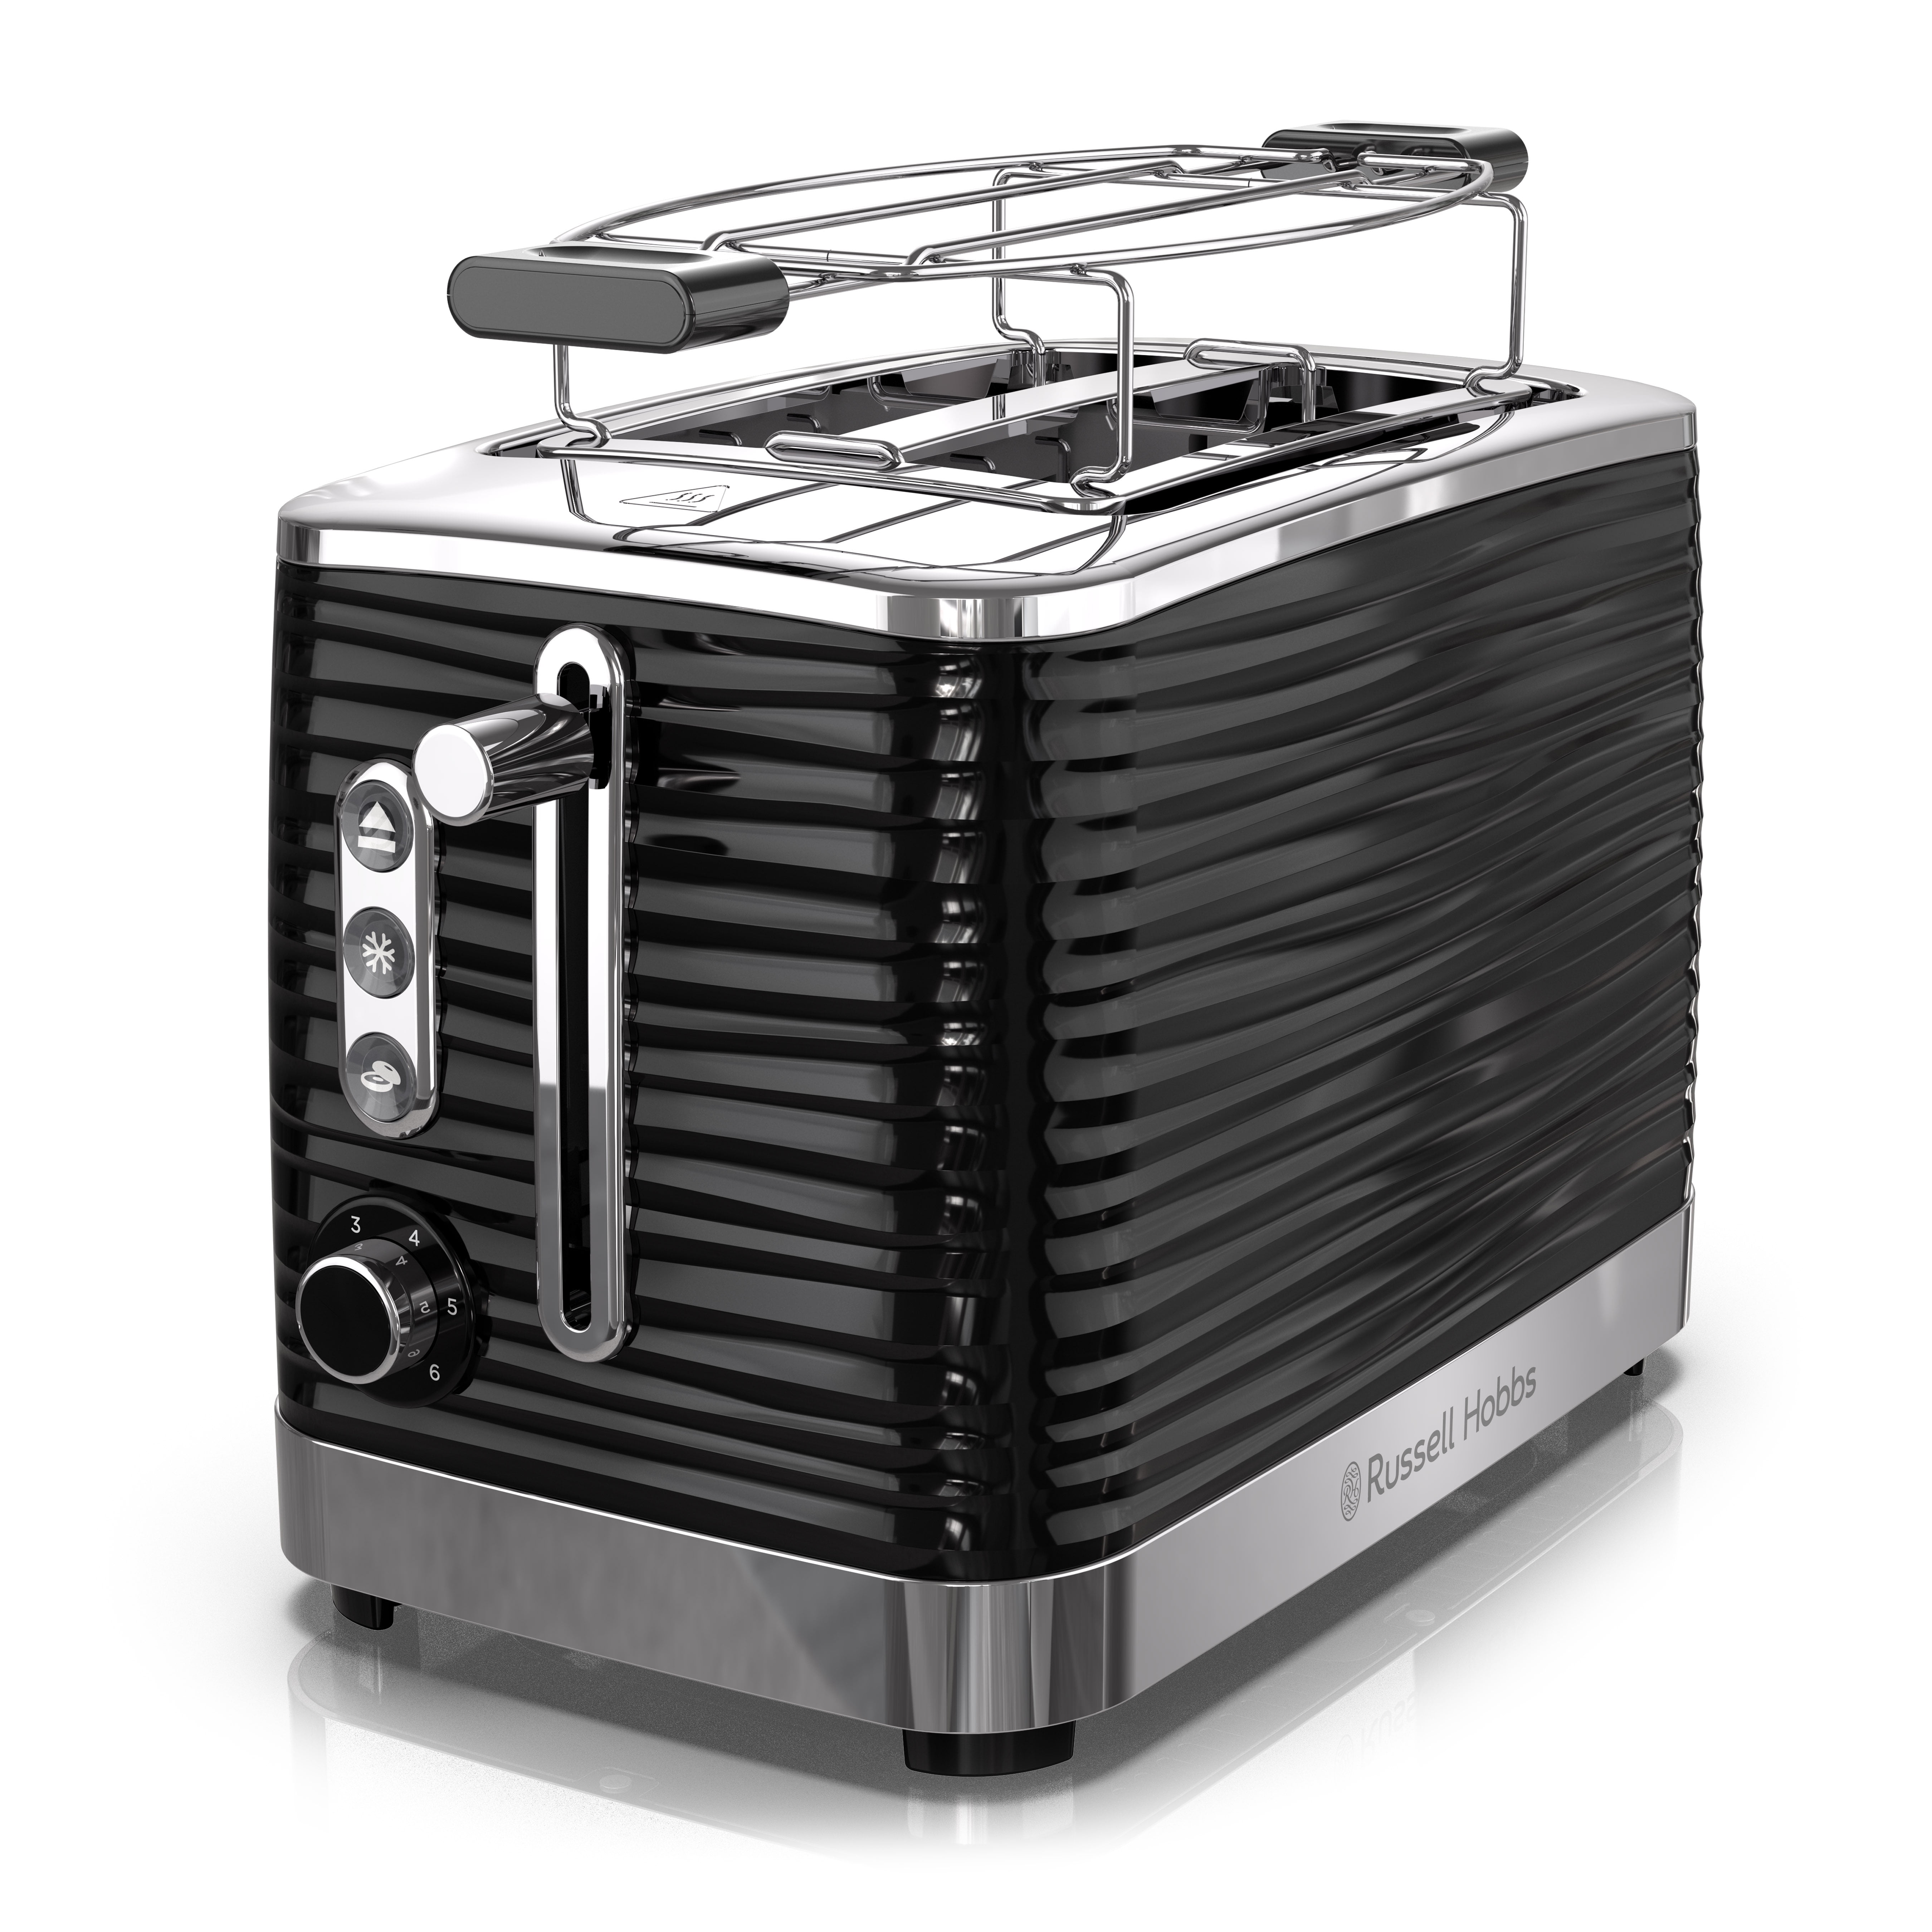 $300 Toaster: Russell Hobbs Crystal Toaster